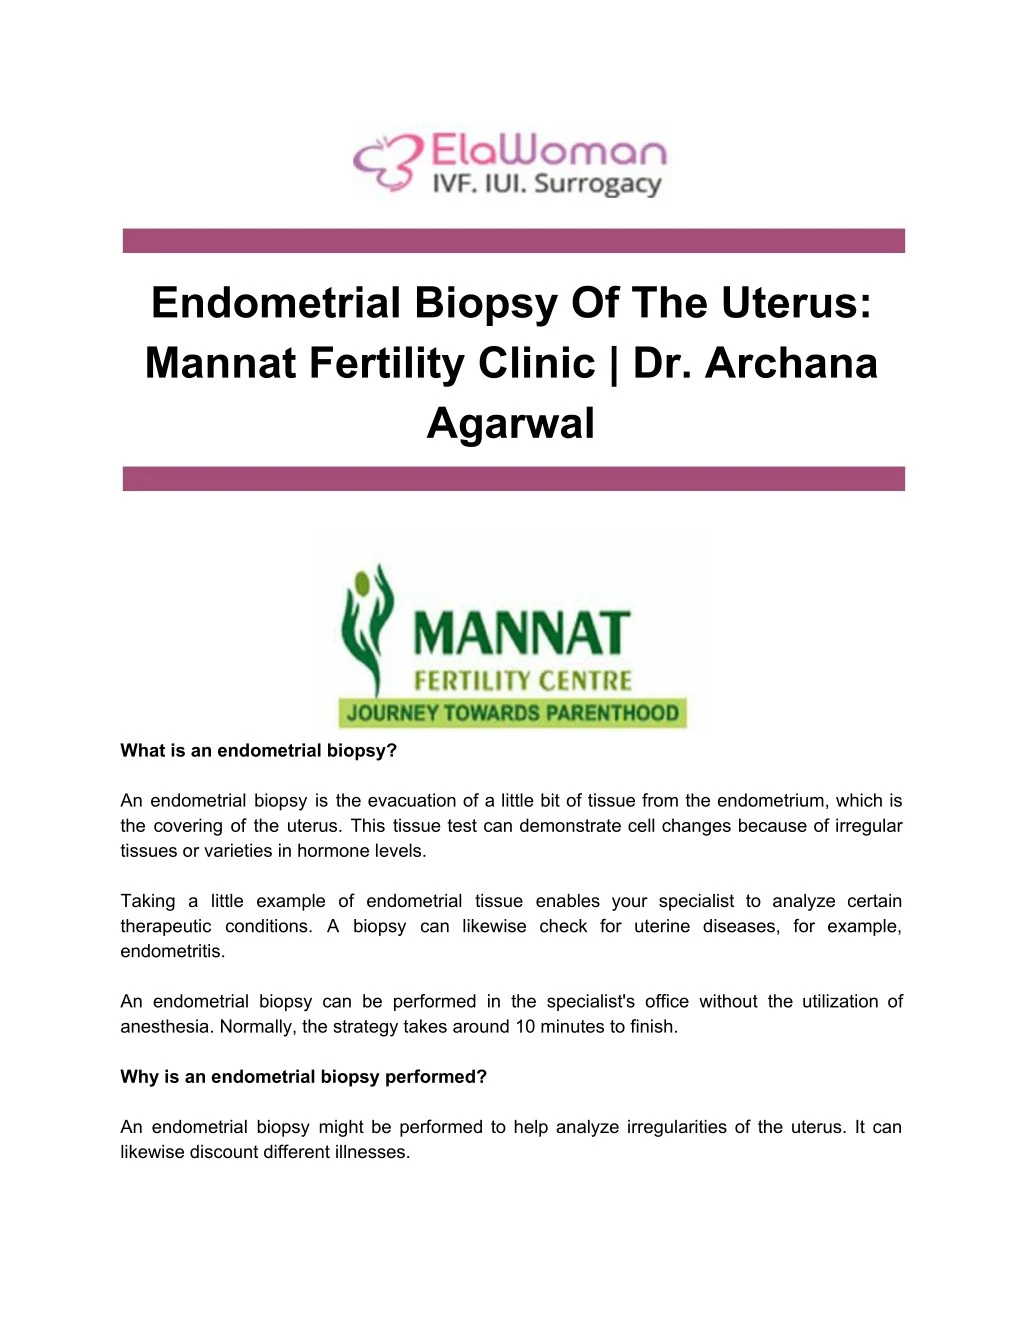 endometrial biopsy of the uterus mannat fertility